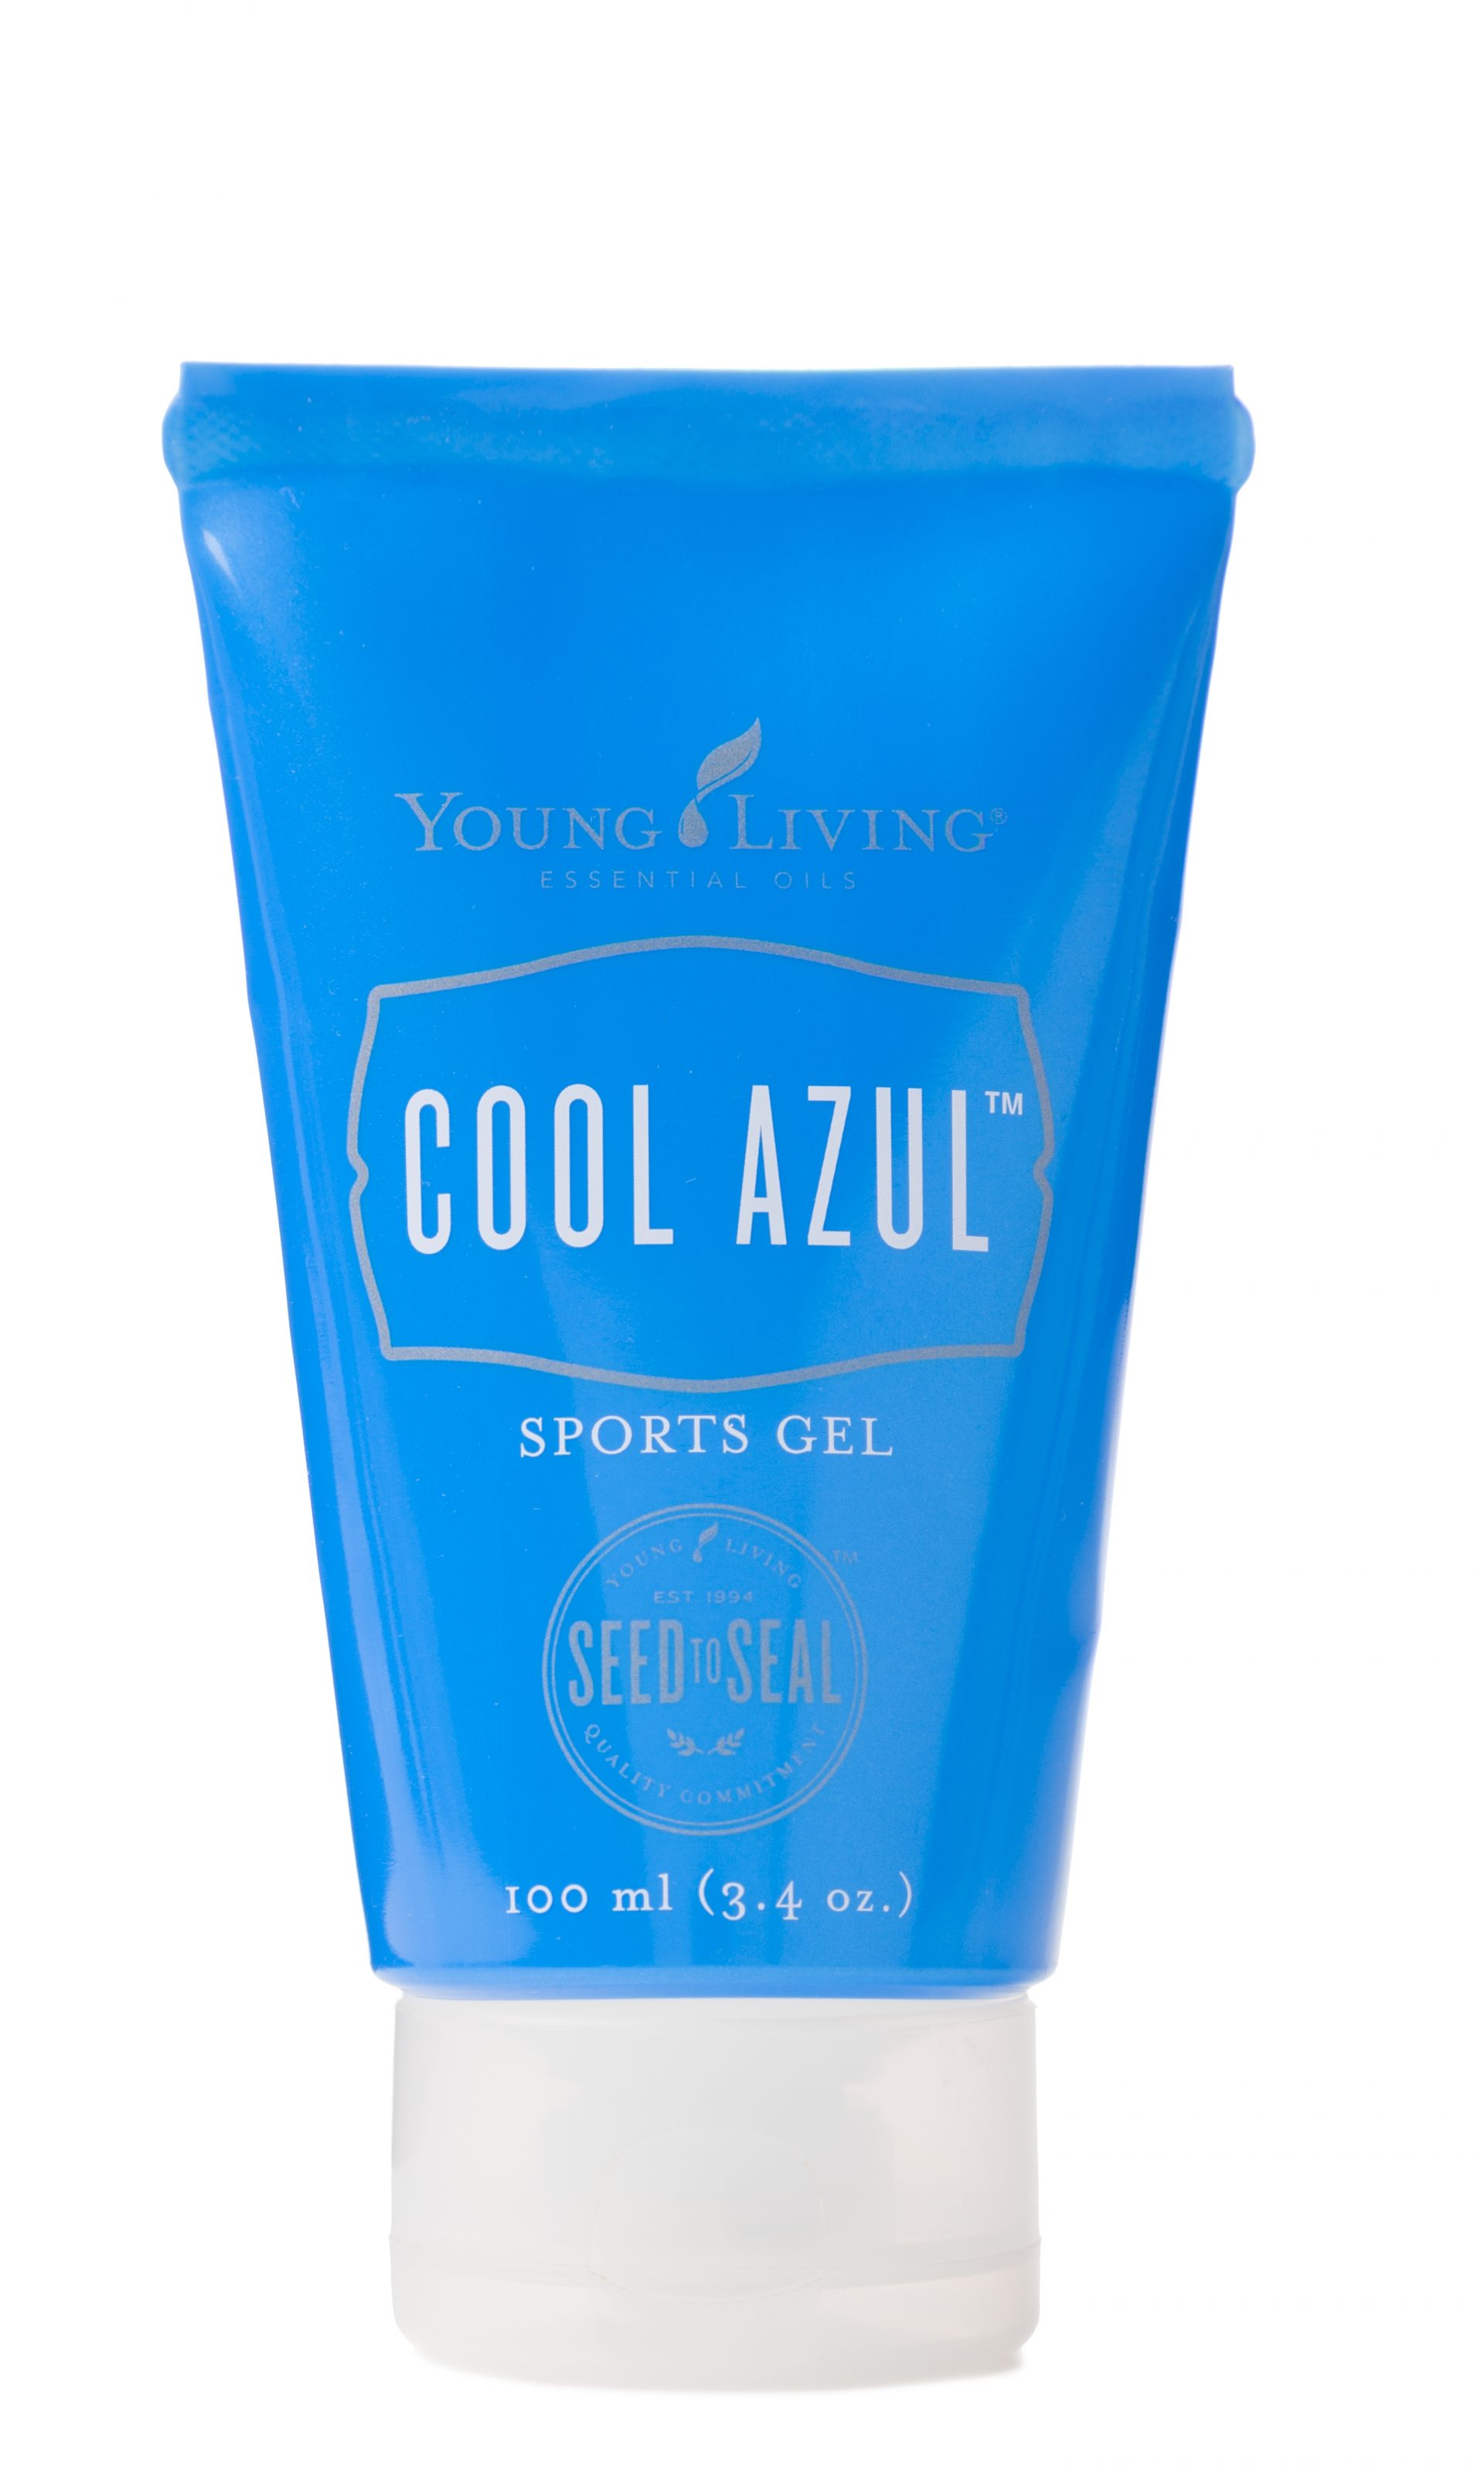 Cool Azul Sports gel